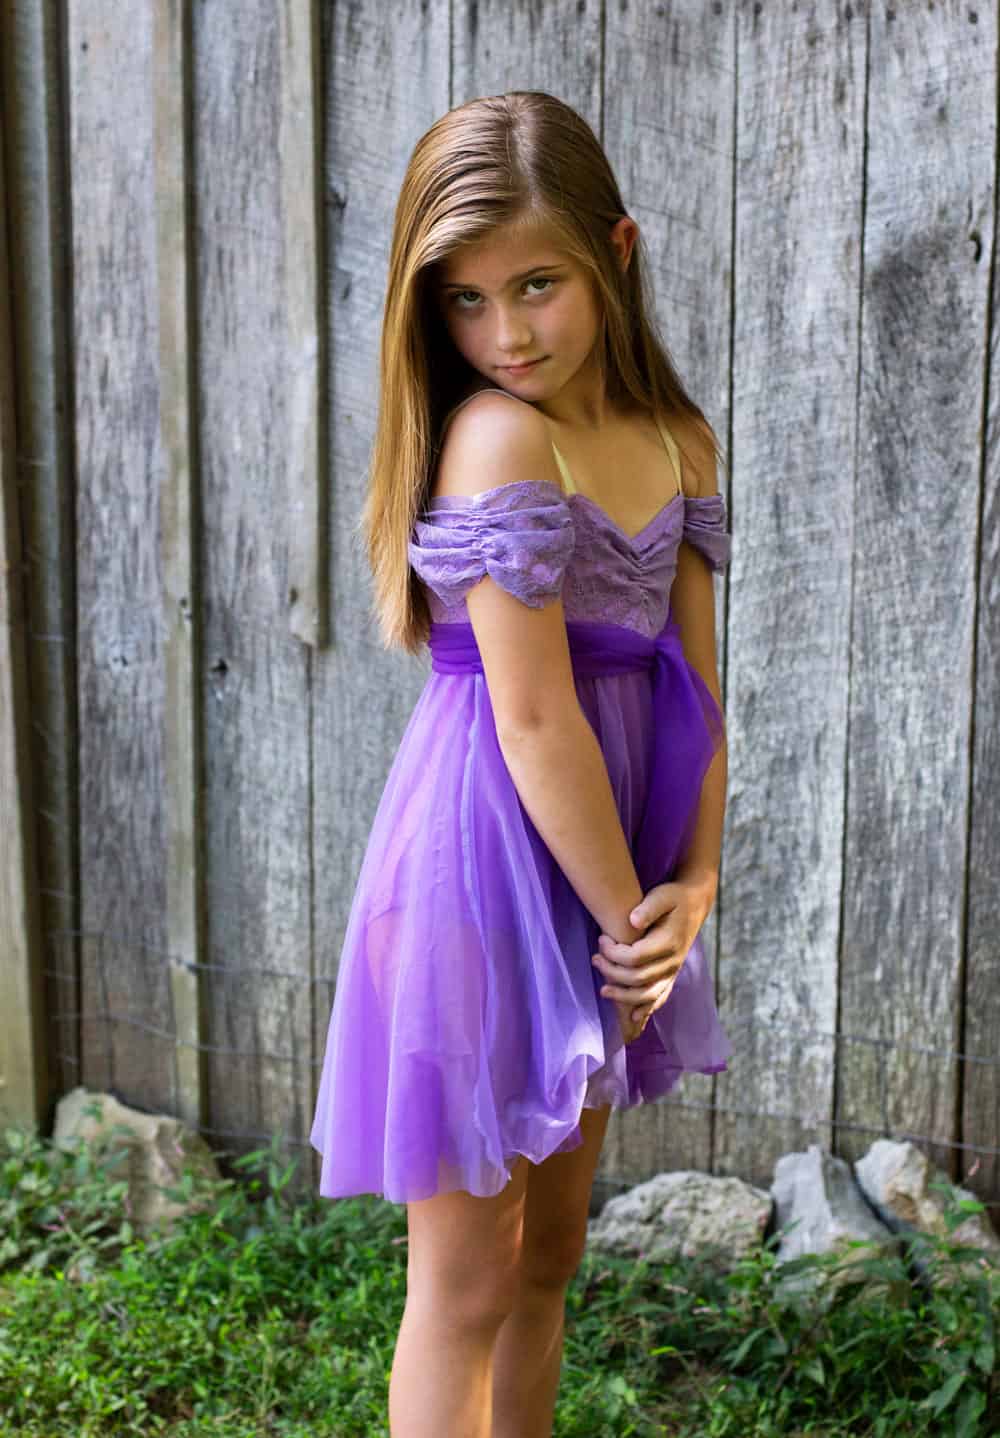 Lyrical dancer in a purple dress in a dance pose.